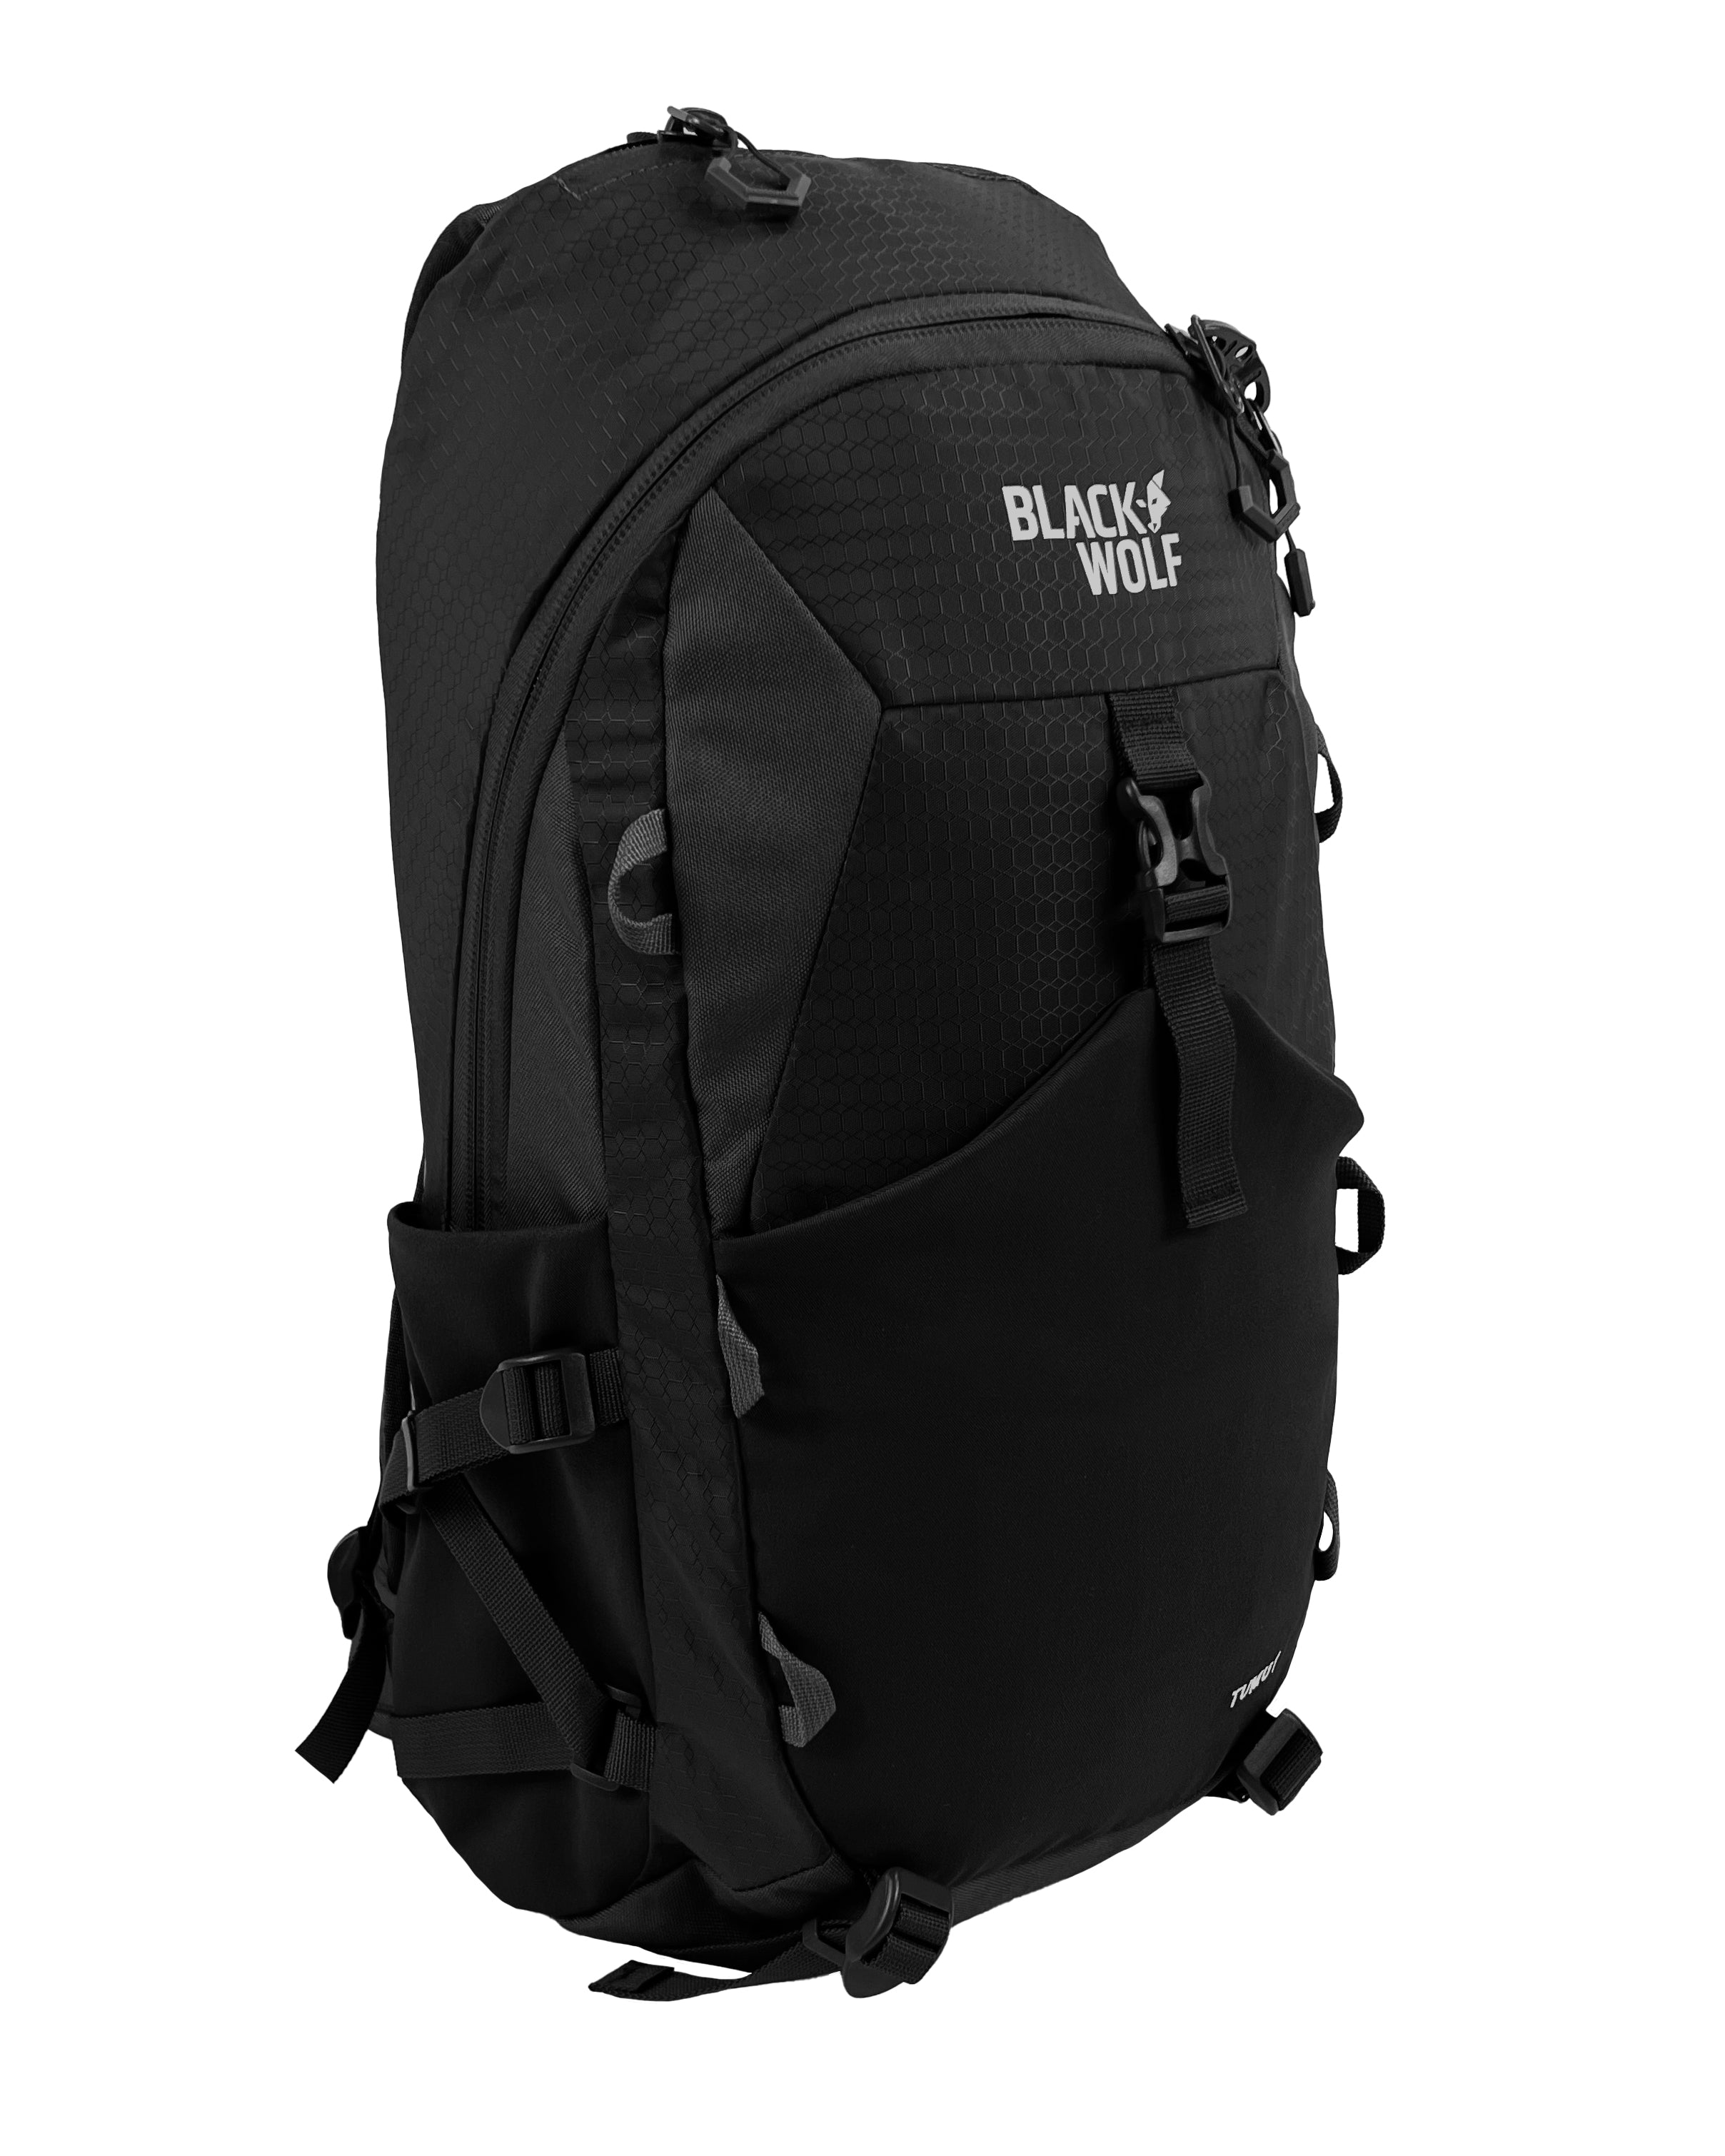 Black Wolf - Tumut 25L Backpack - Jet Black